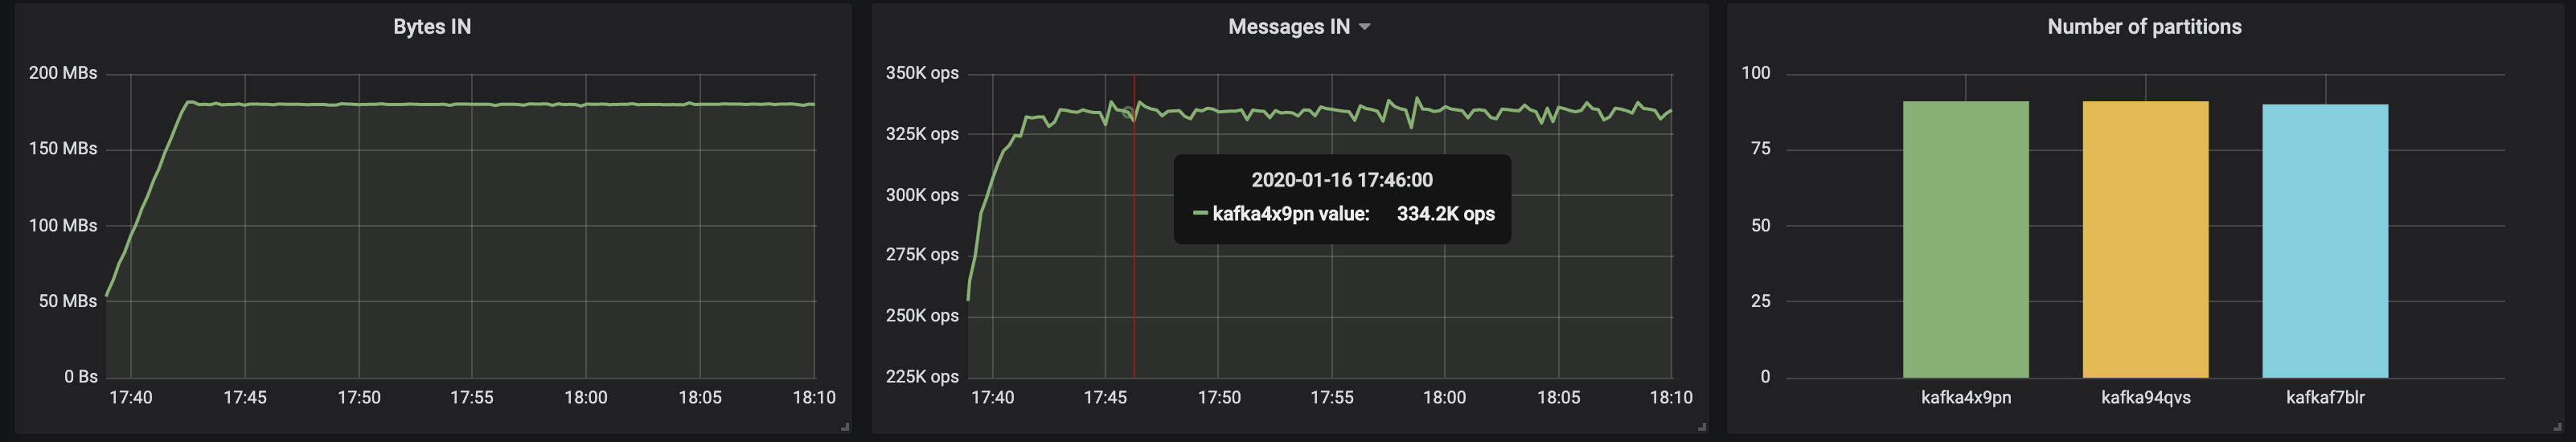 kafka4x9pn messages in